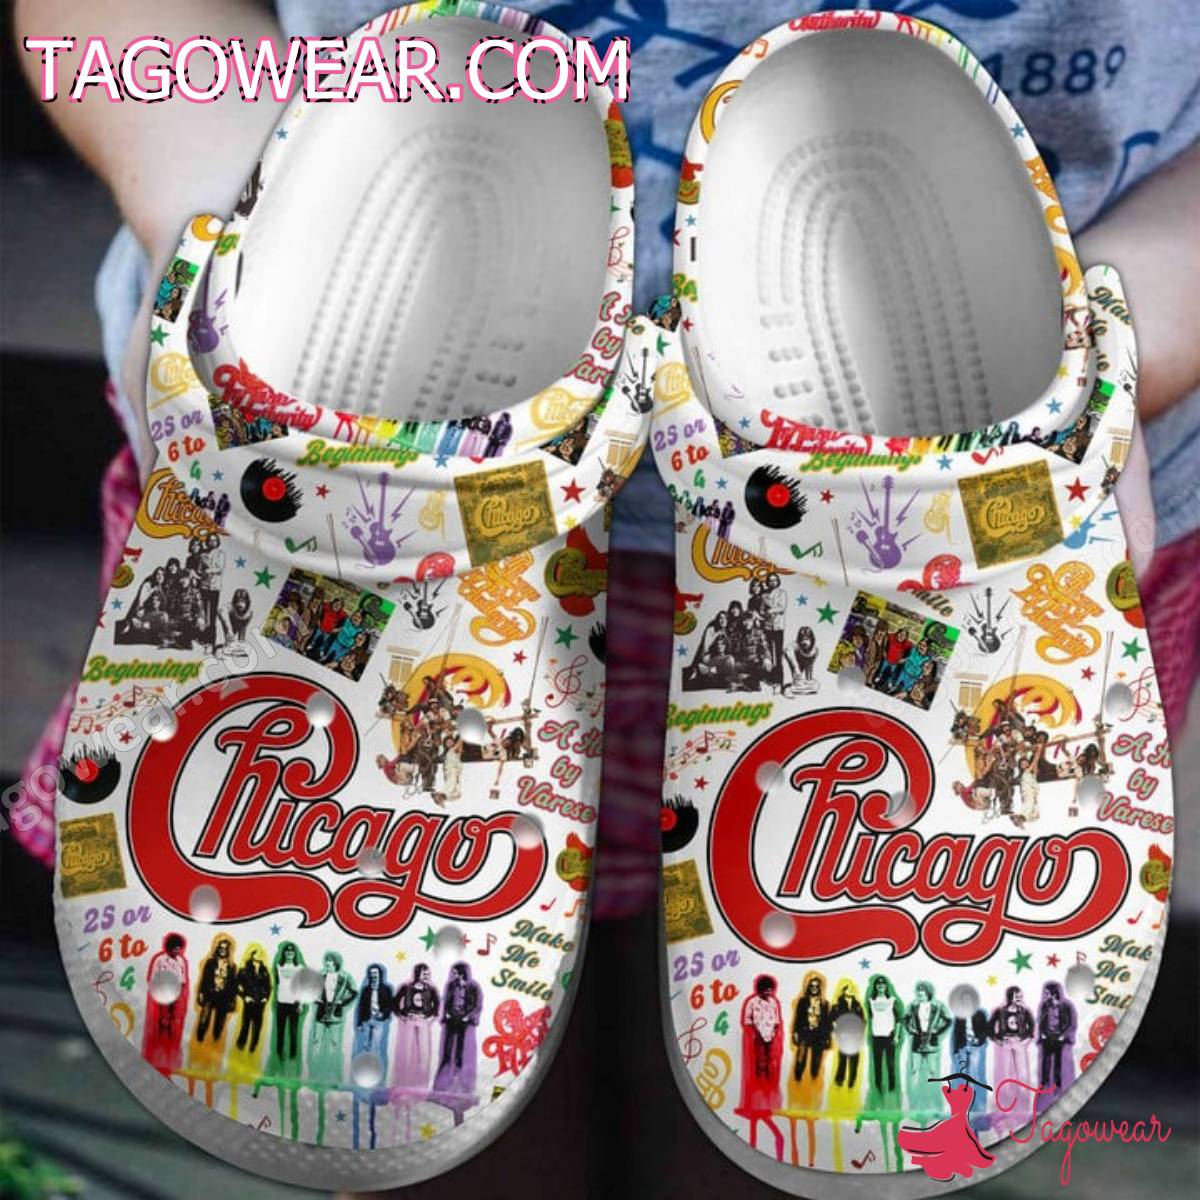 Chicago Rock Band Pattern Crocs Clogs